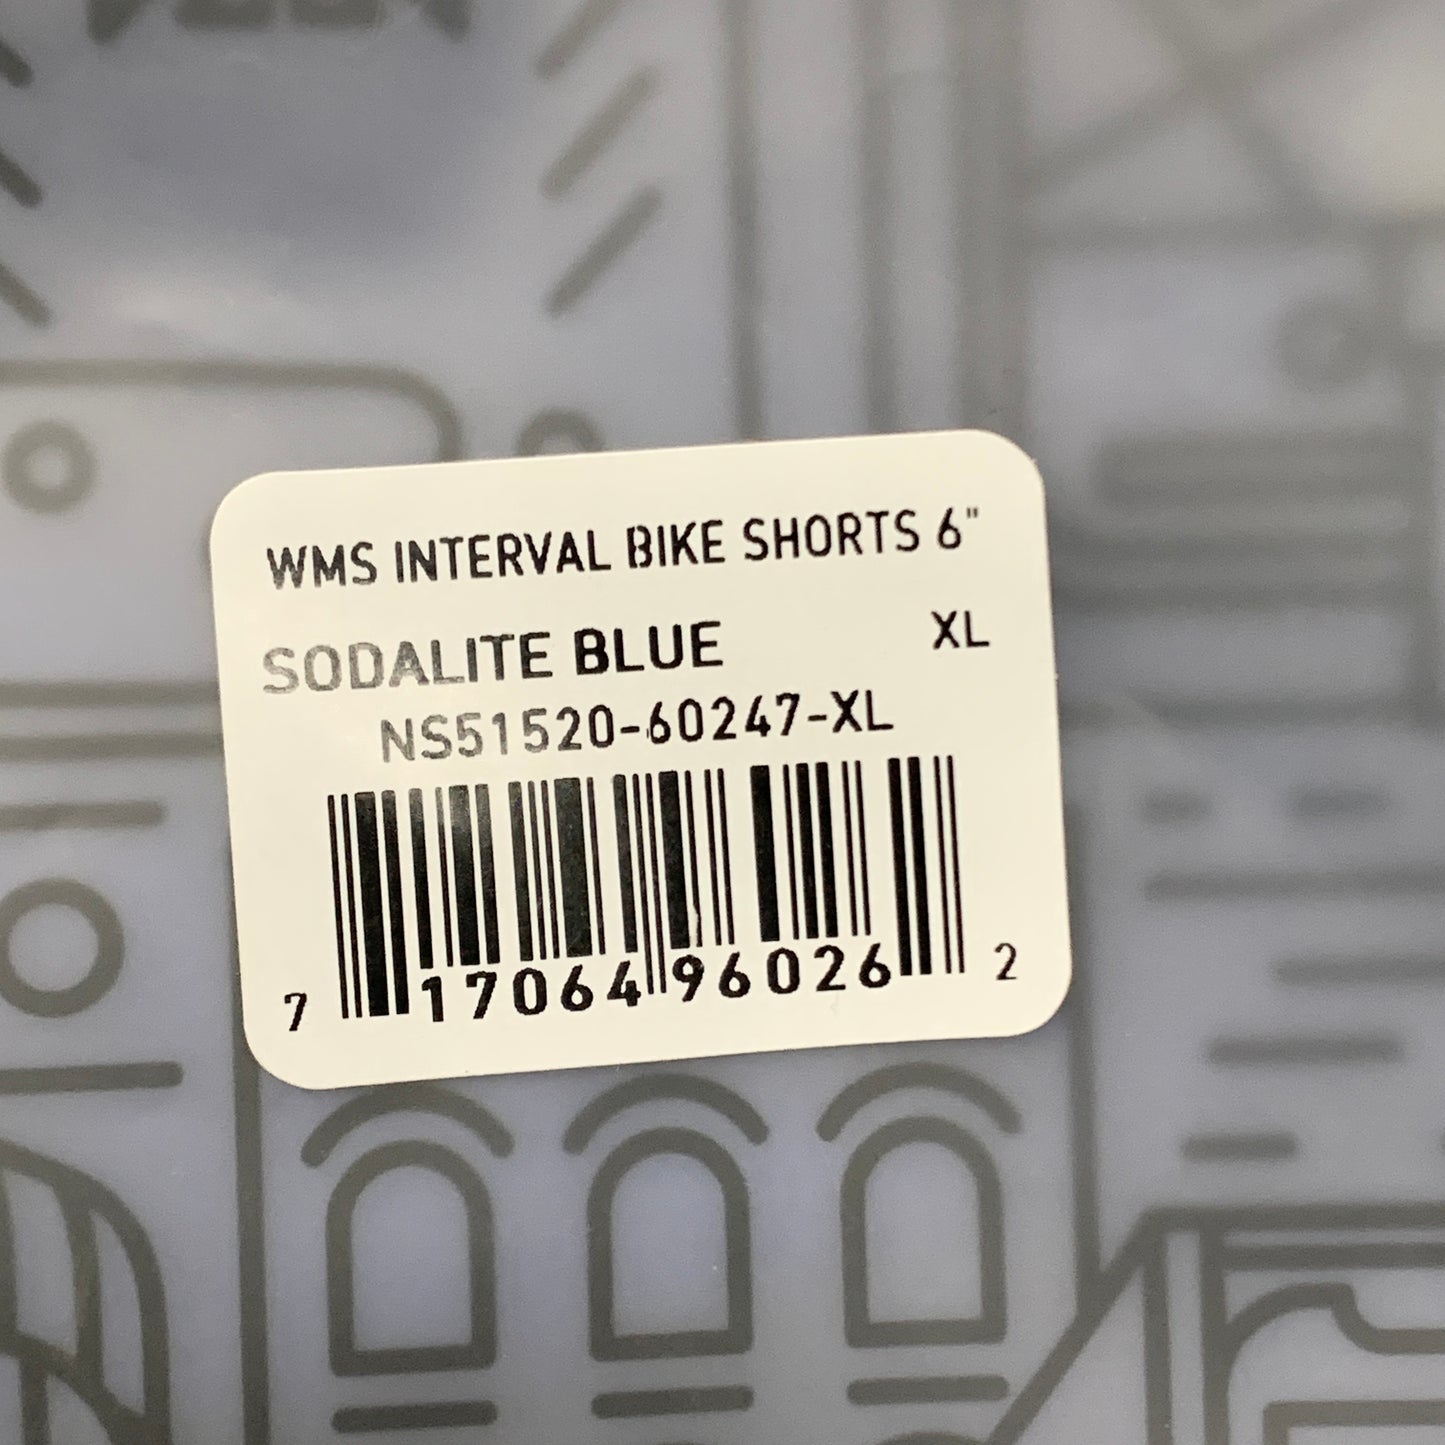 NATHAN Interval 6" Inseam Bike Short Womens Sodalite Blue Sz XL NS51520-60247-XL